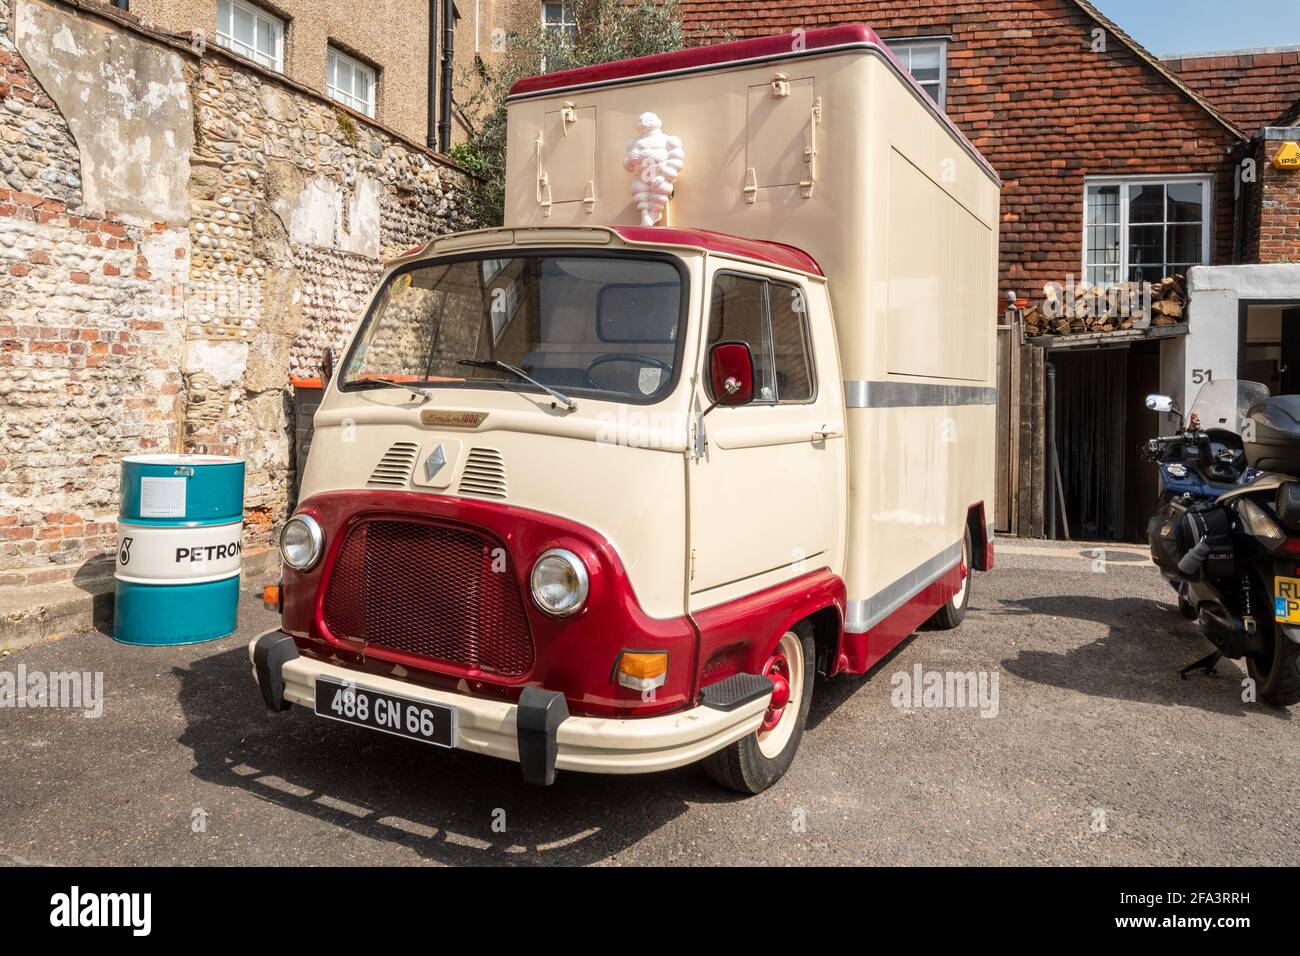 Renault Estafette 1000 vintage van in Arundel, a market town in West Sussex, England, UK Stock Photo